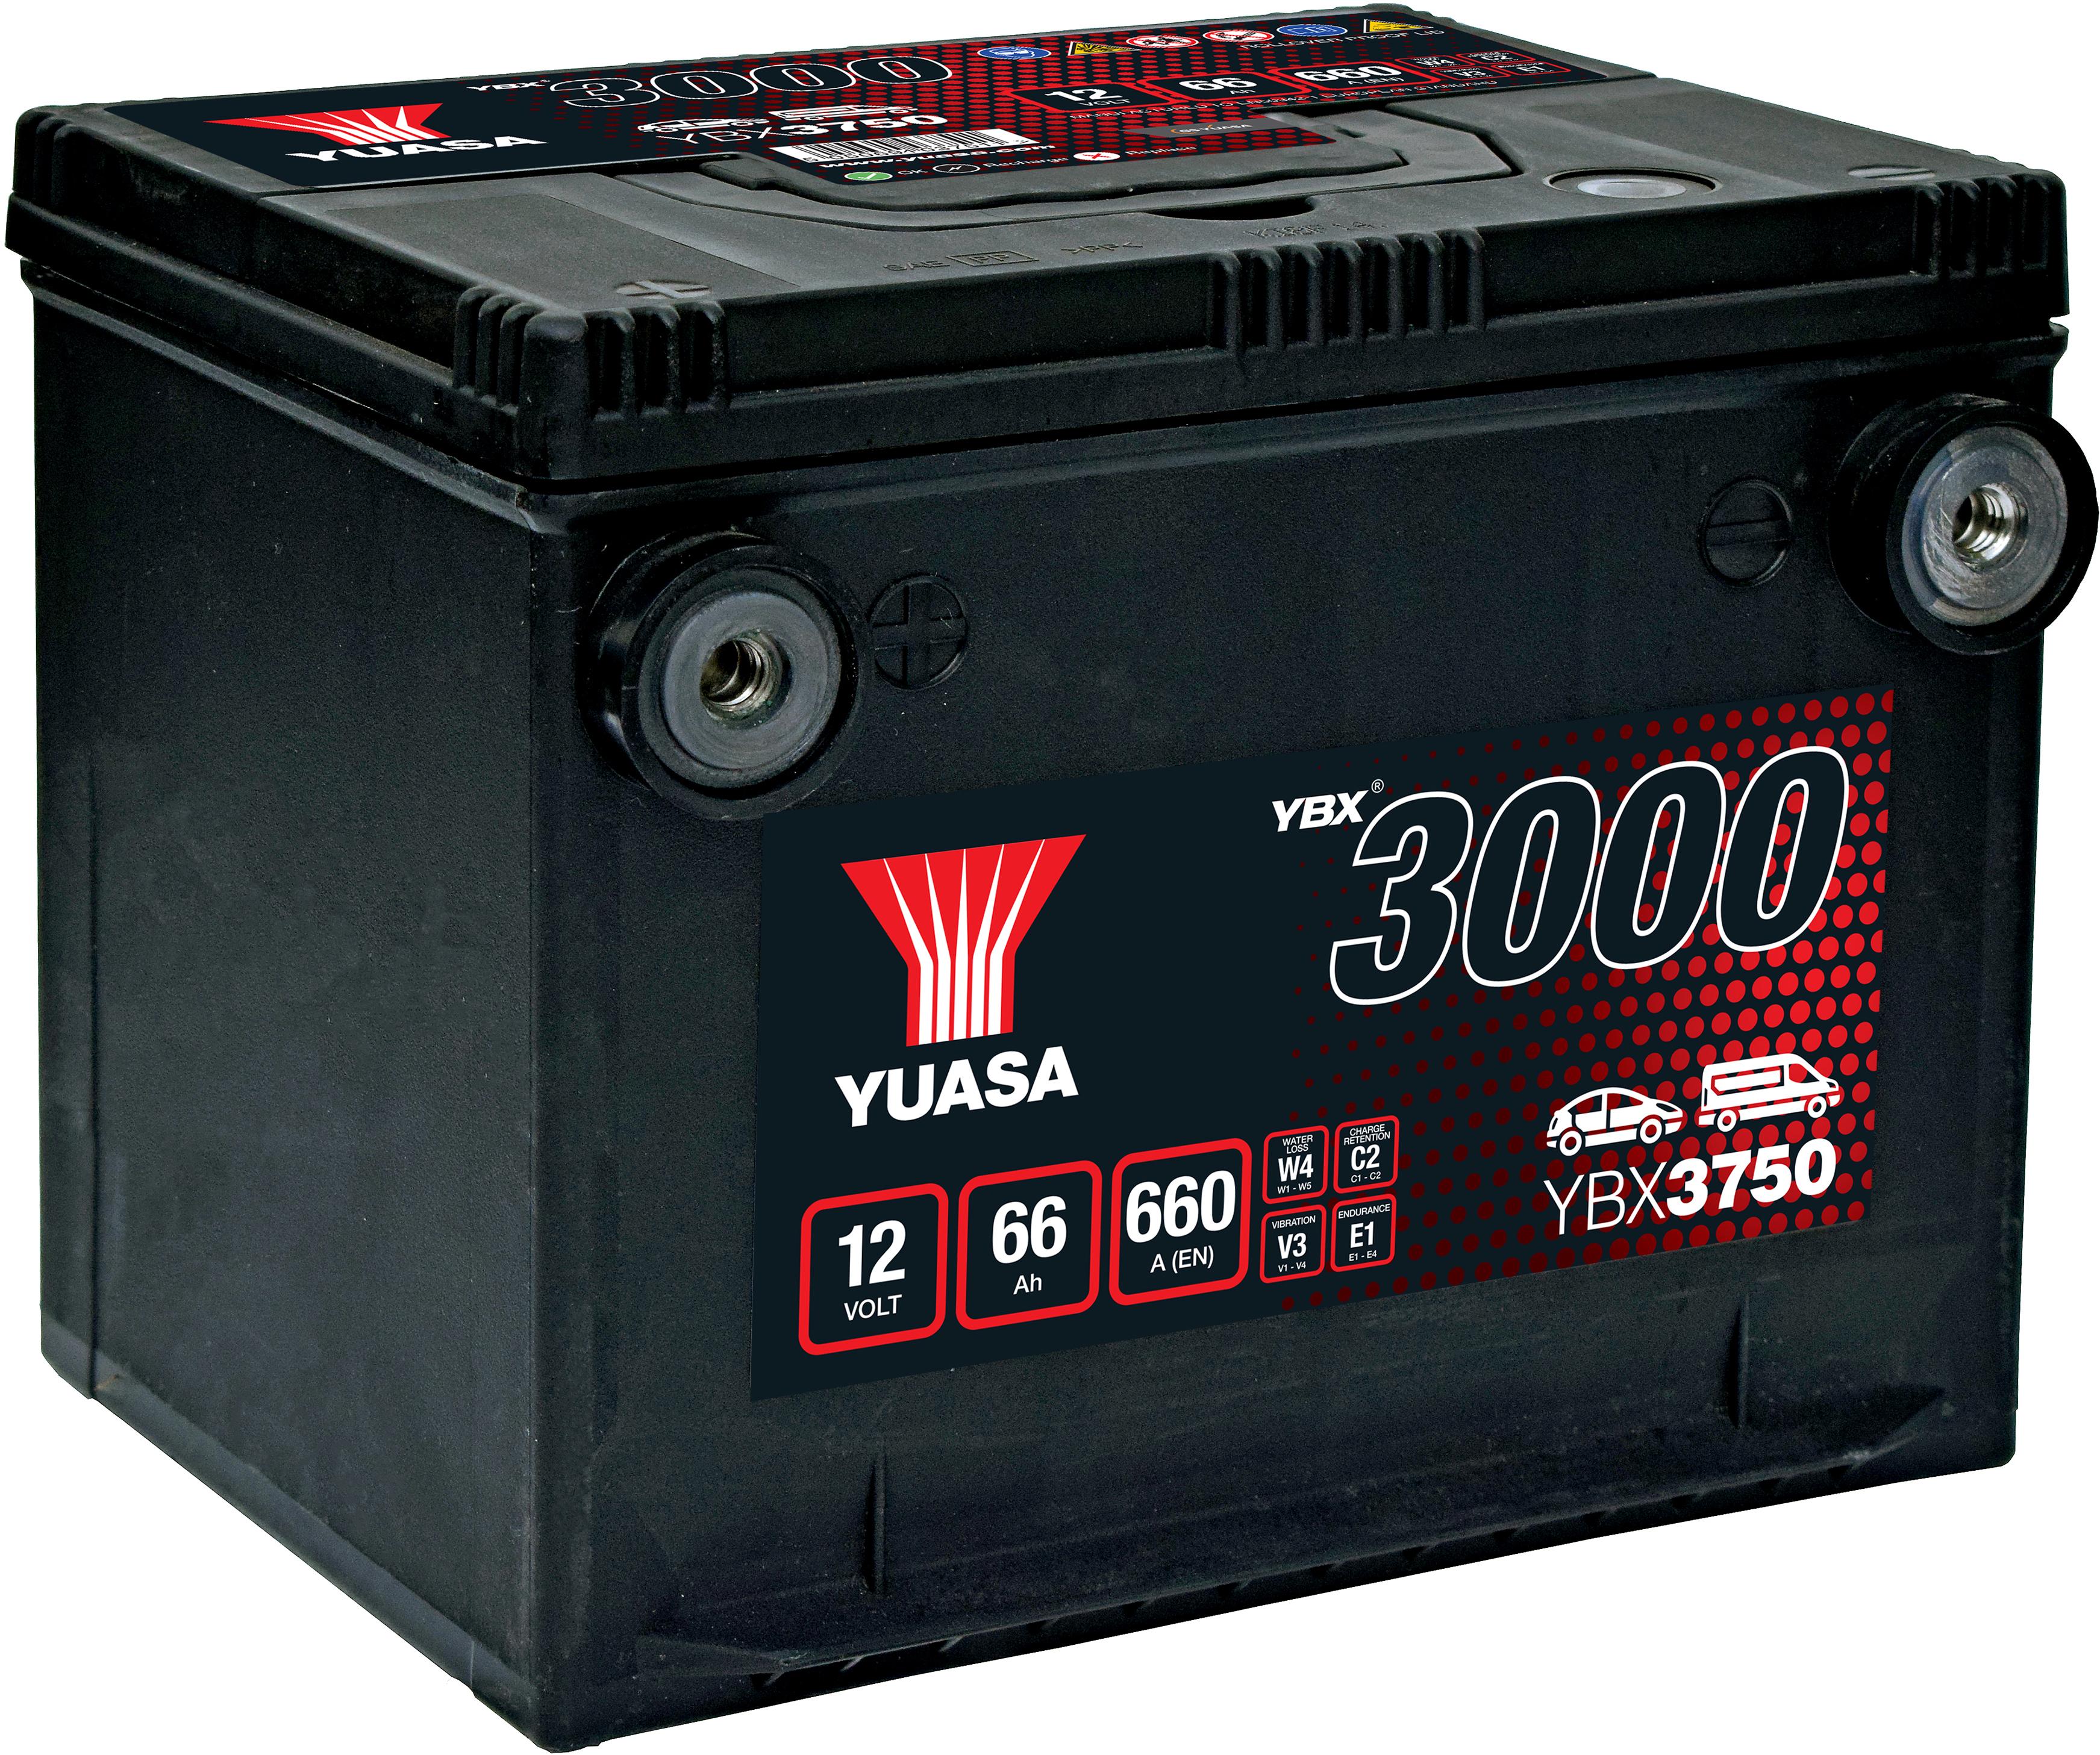 Ybx3750 12V 66Ah 660A Yuasa Smf Battery